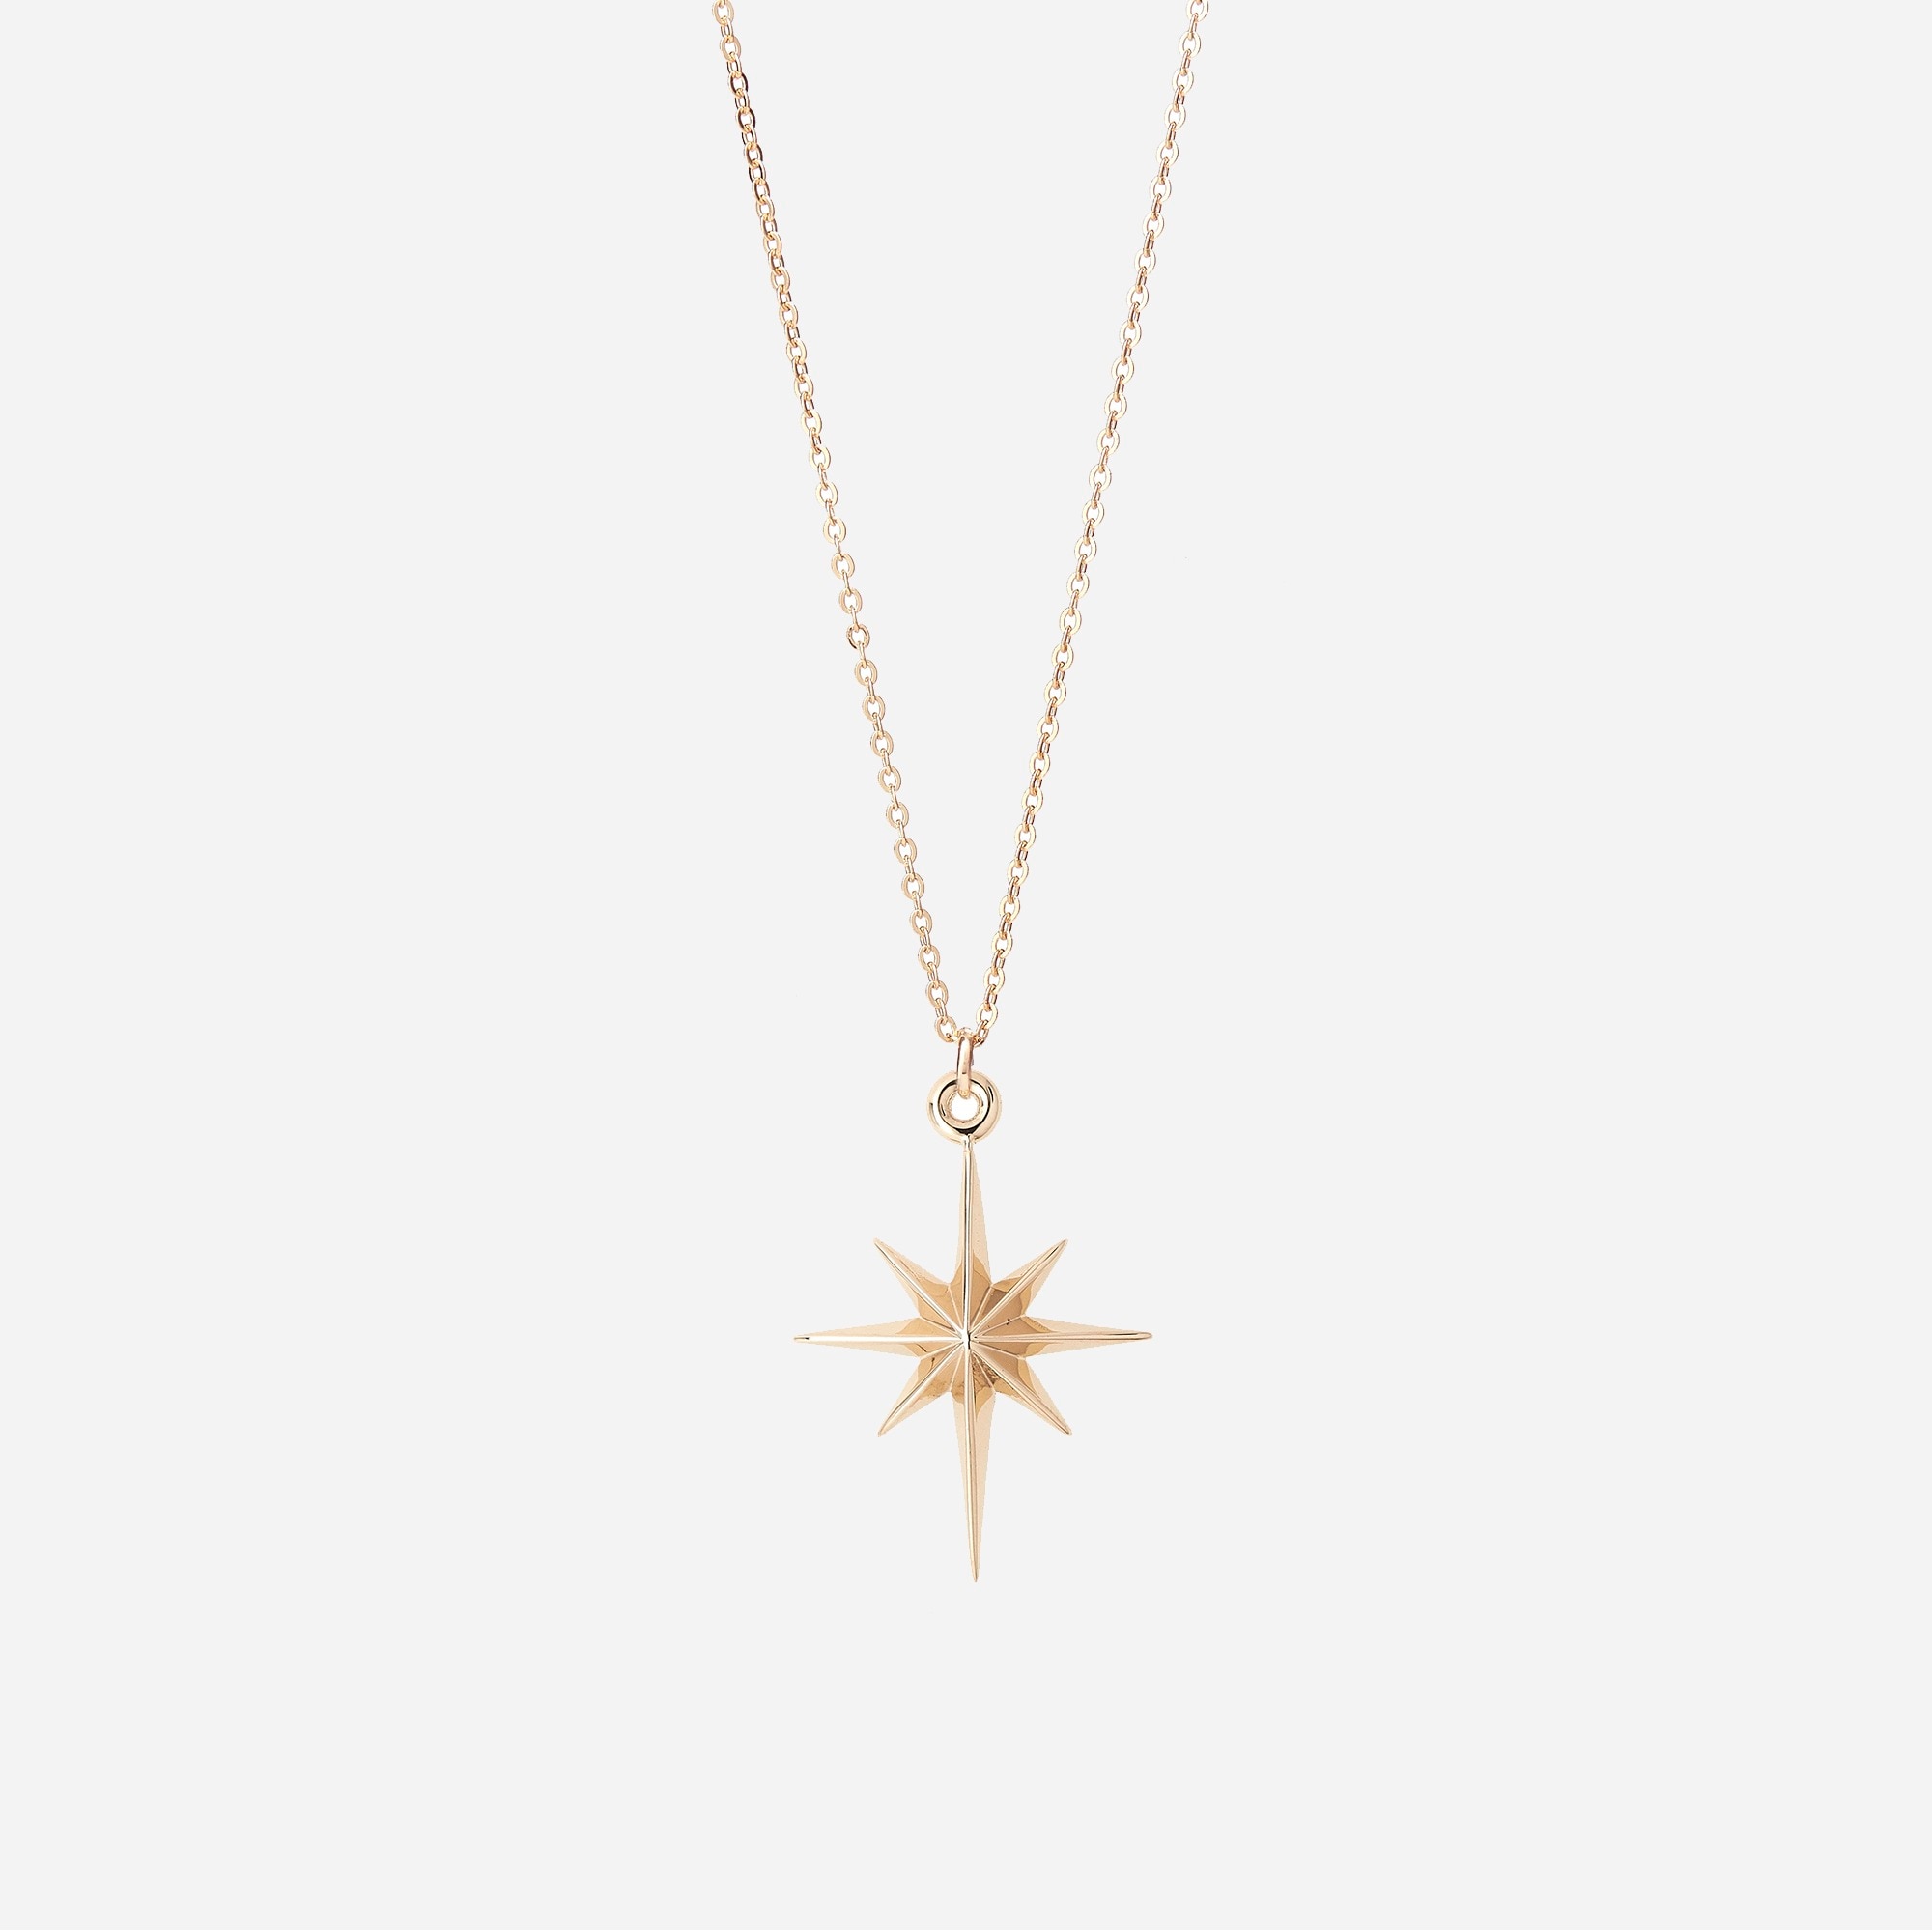  TALON JEWELRY North Star pendant necklace